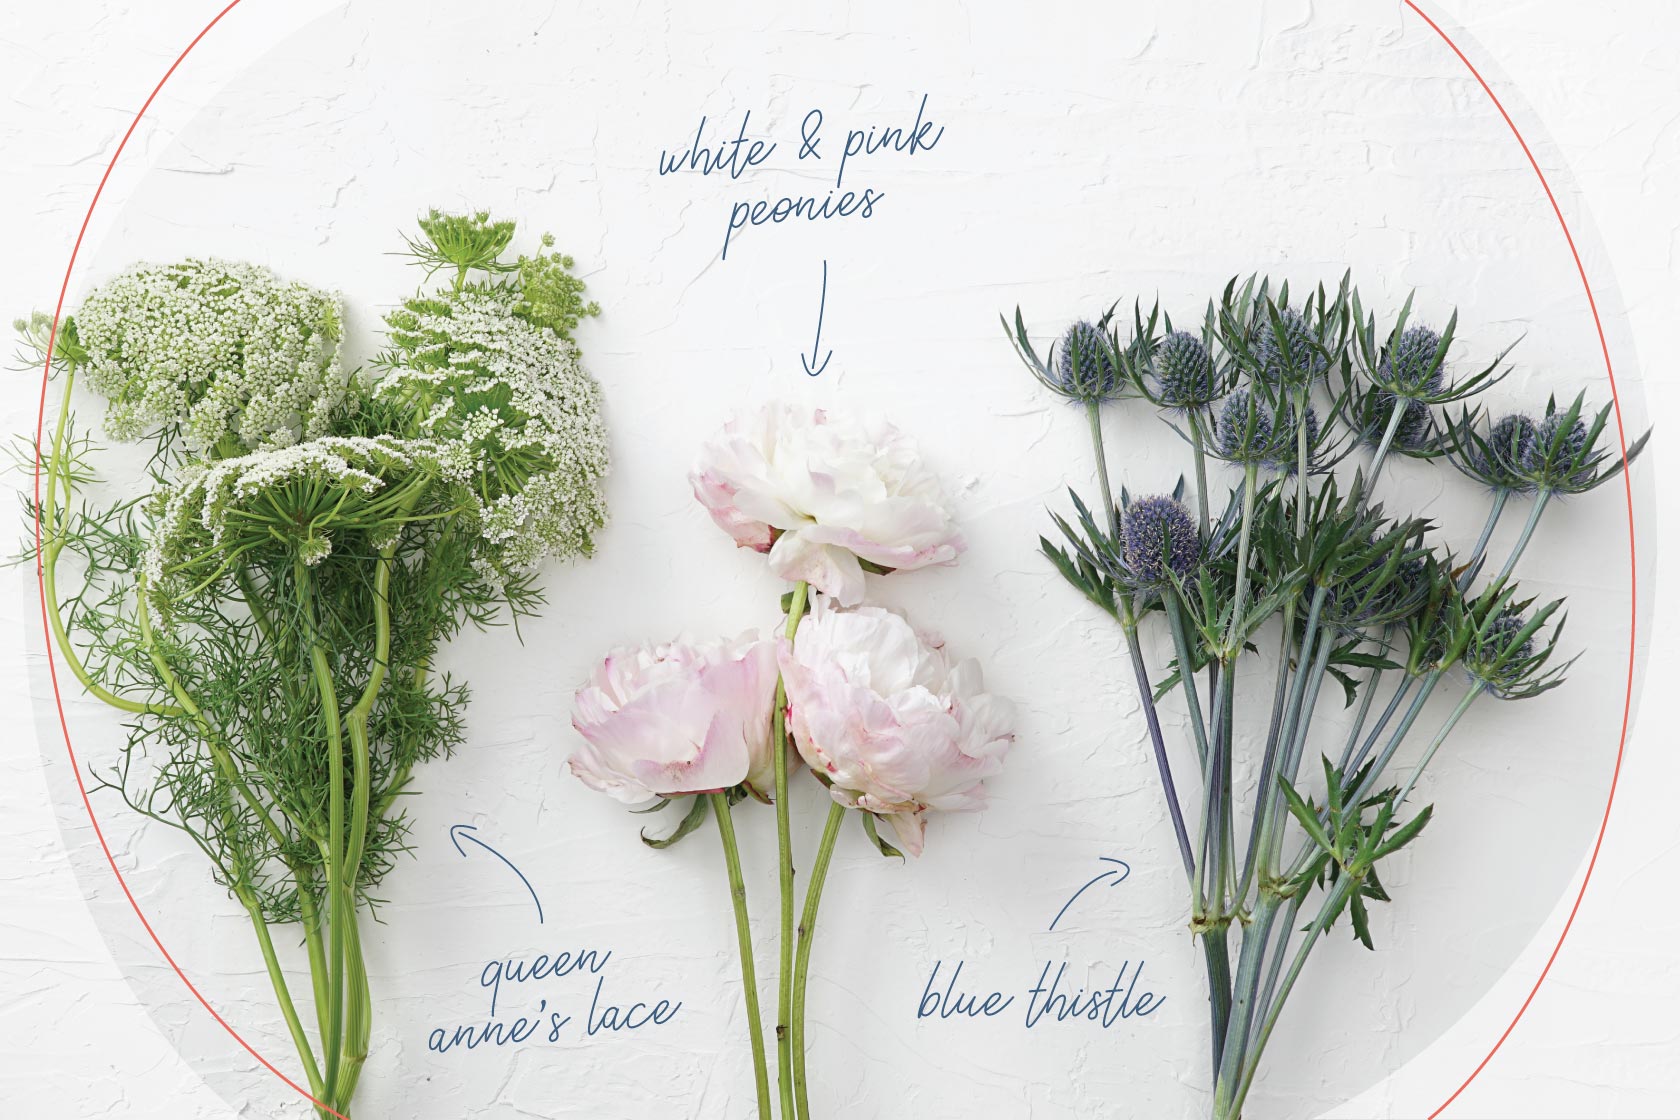 How to Make a Homemade Wedding Bouquet: The Basics